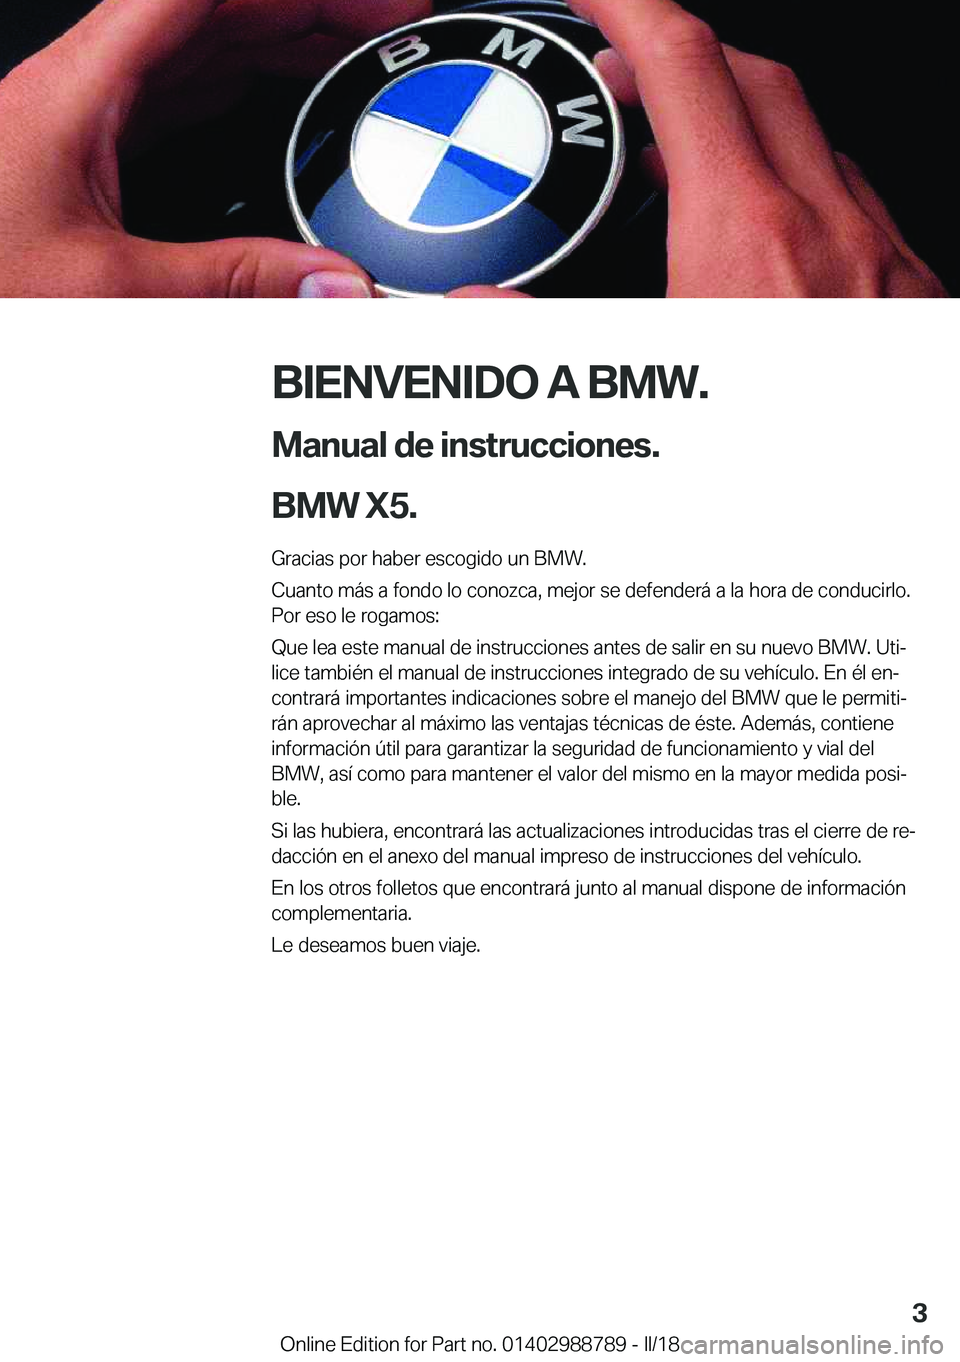 BMW X5 2018  Manuales de Empleo (in Spanish) �B�I�E�N�V�E�N�I�D�O��A��B�M�W�.
�M�a�n�u�a�l��d�e��i�n�s�t�r�u�c�c�i�o�n�e�s�.
�B�M�W��X�5�. �G�r�a�c�i�a�s� �p�o�r� �h�a�b�e�r� �e�s�c�o�g�i�d�o� �u�n� �B�M�W�.�C�u�a�n�t�o� �m�